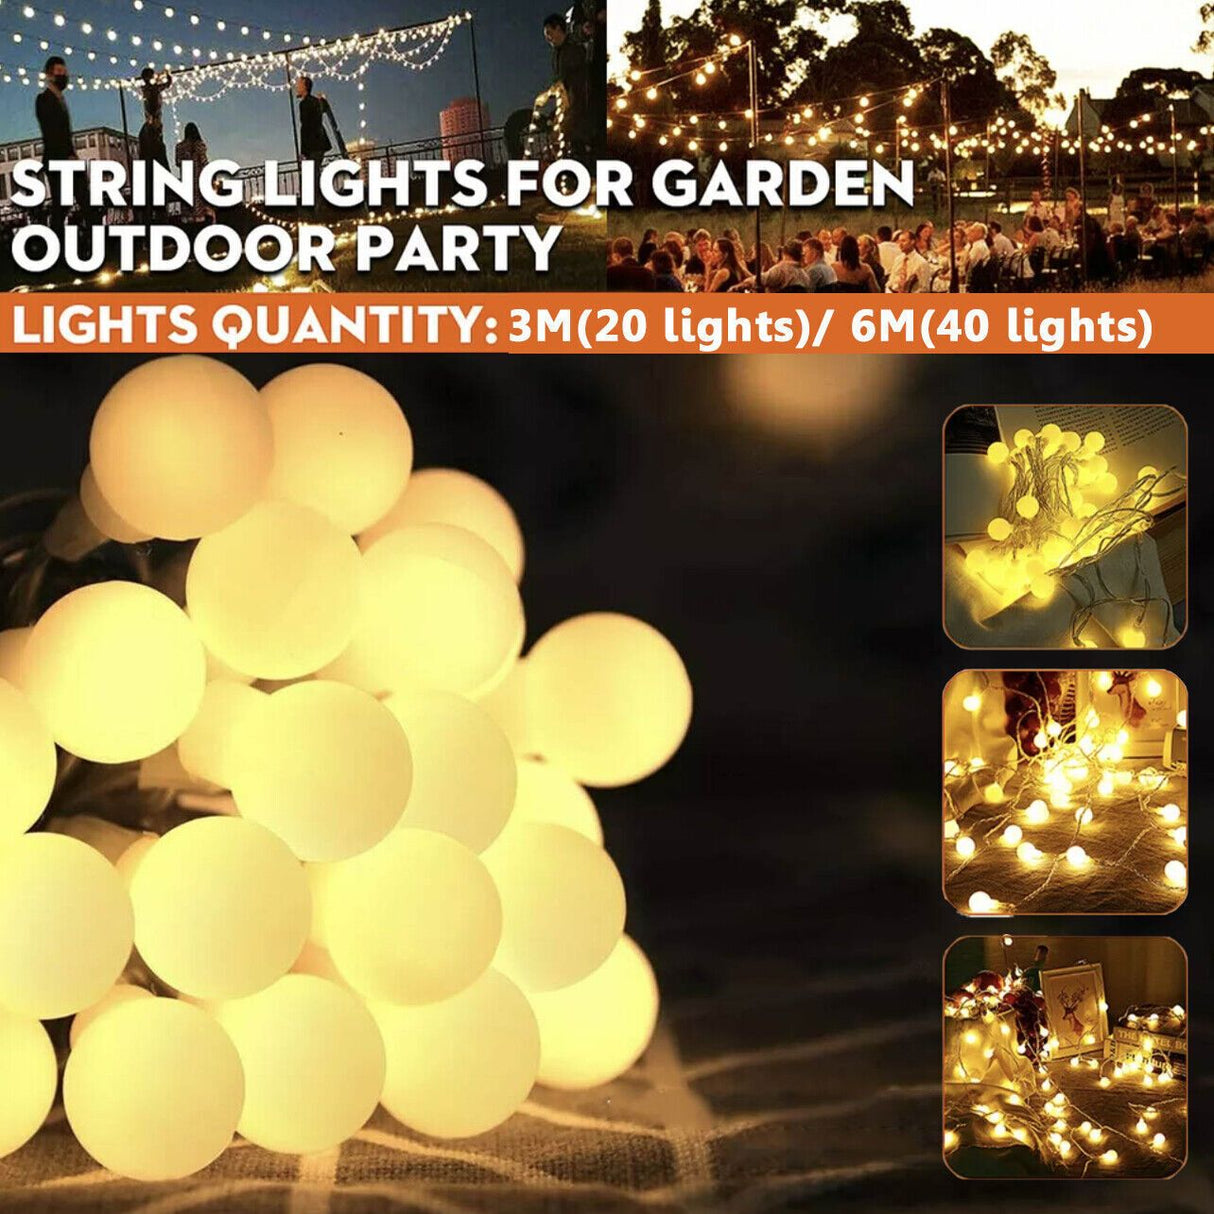 Outdoor Garden Party String Lights